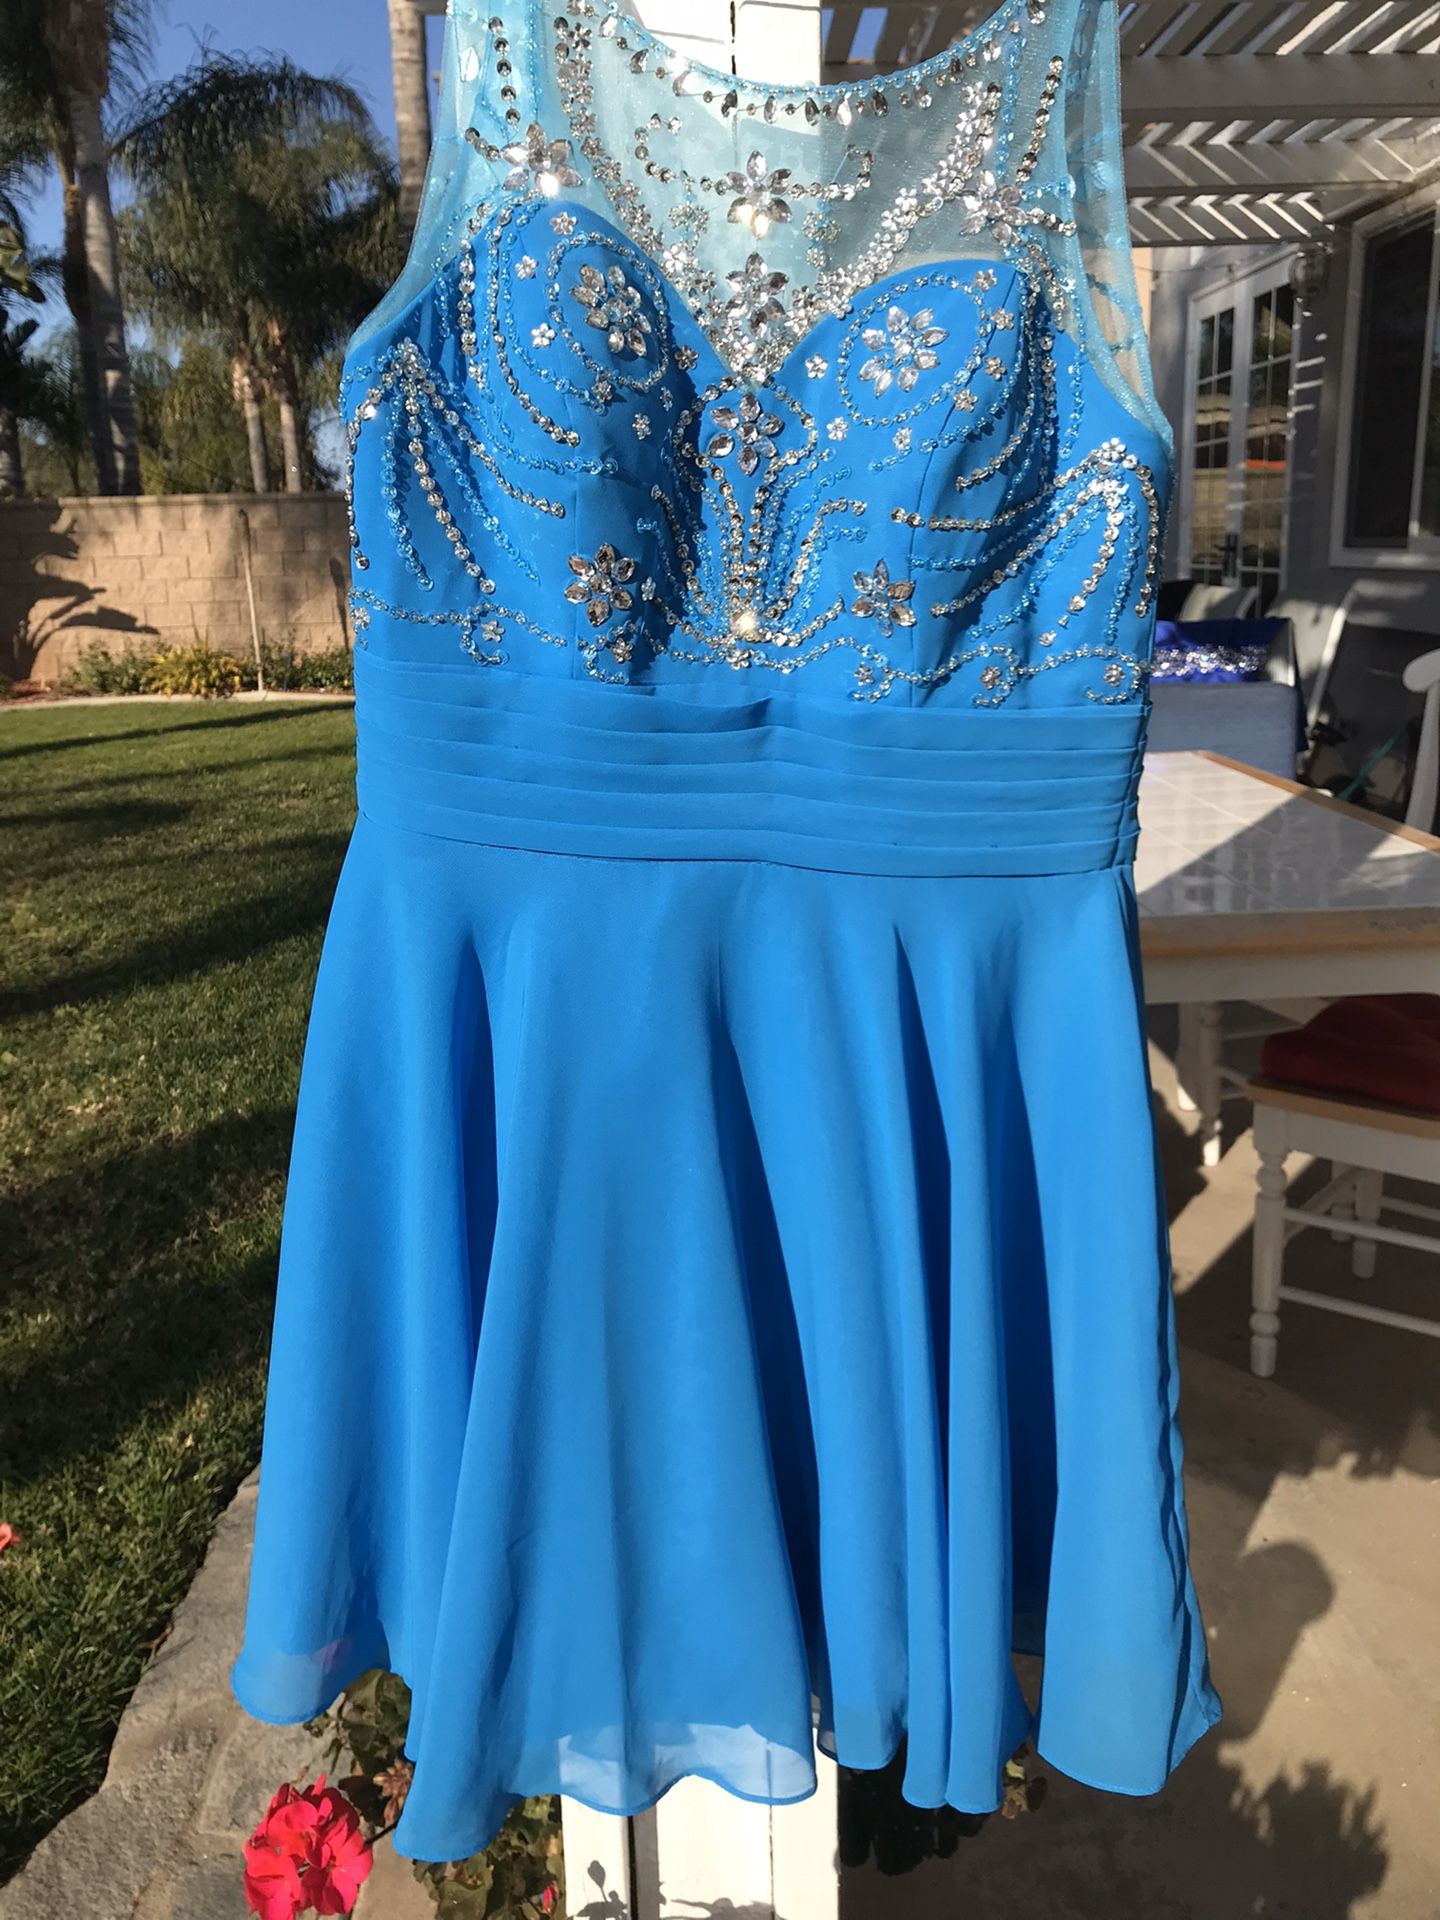 Prom Dress - teal blue - never worn